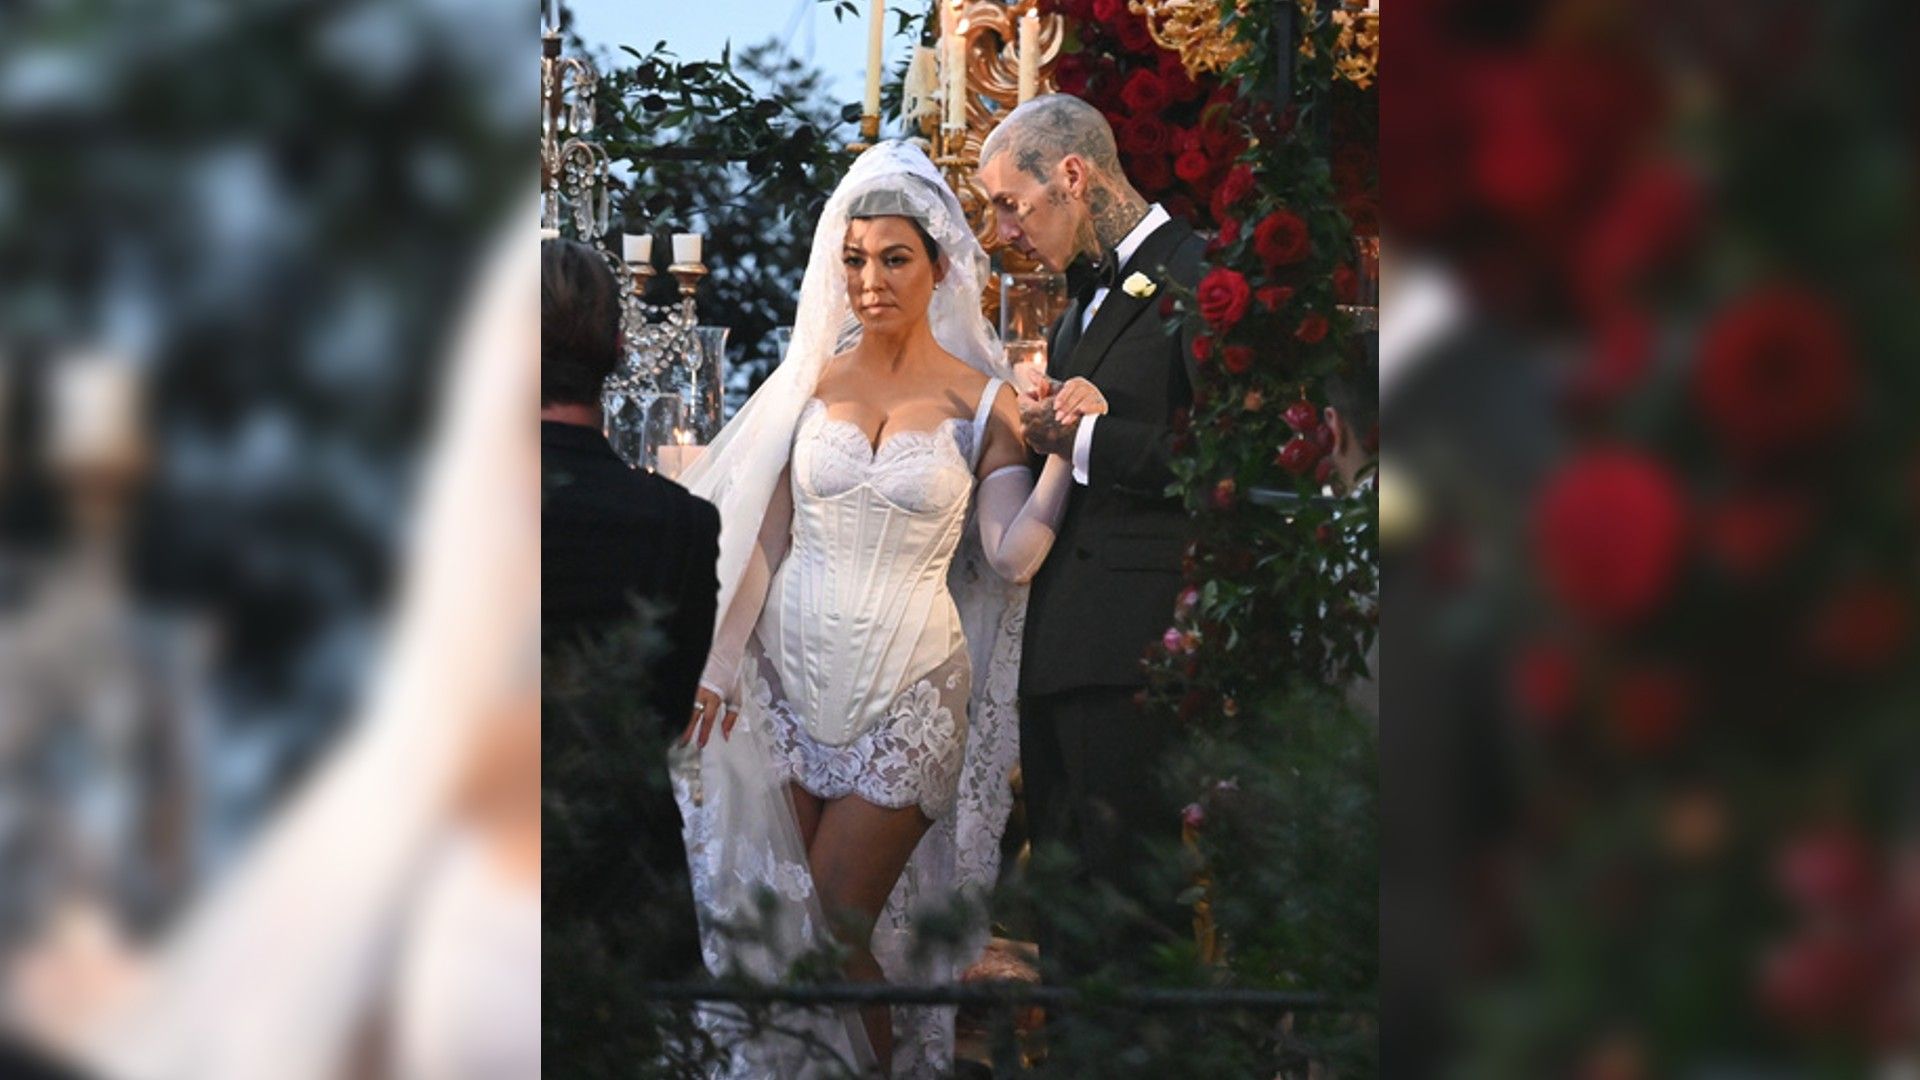 The wedding of Kourtney Kardashian and Travis Barker